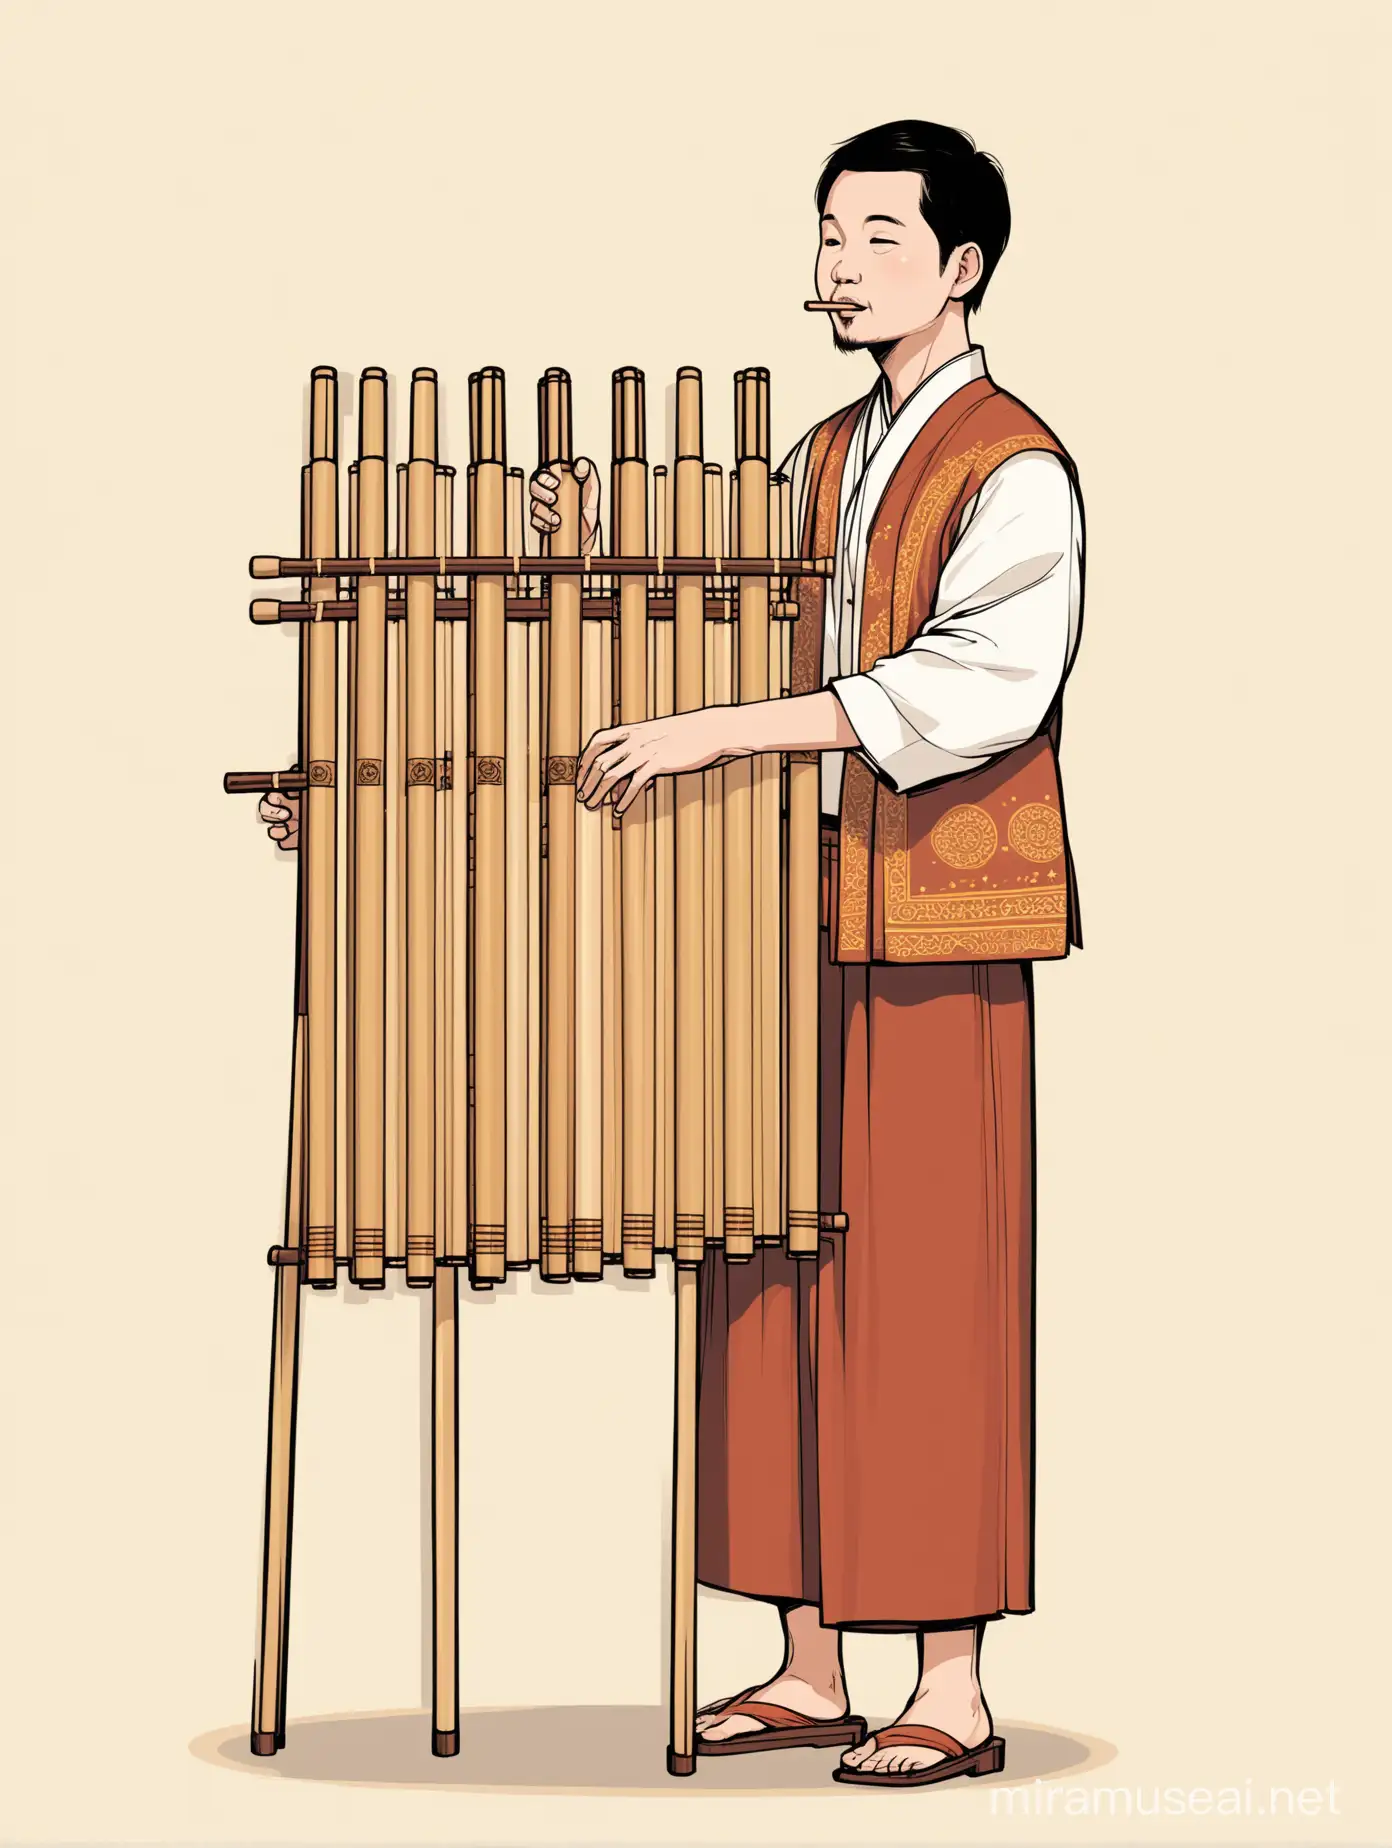 Cartoon Drawing of a Man Playing Angklung Musical Instrument